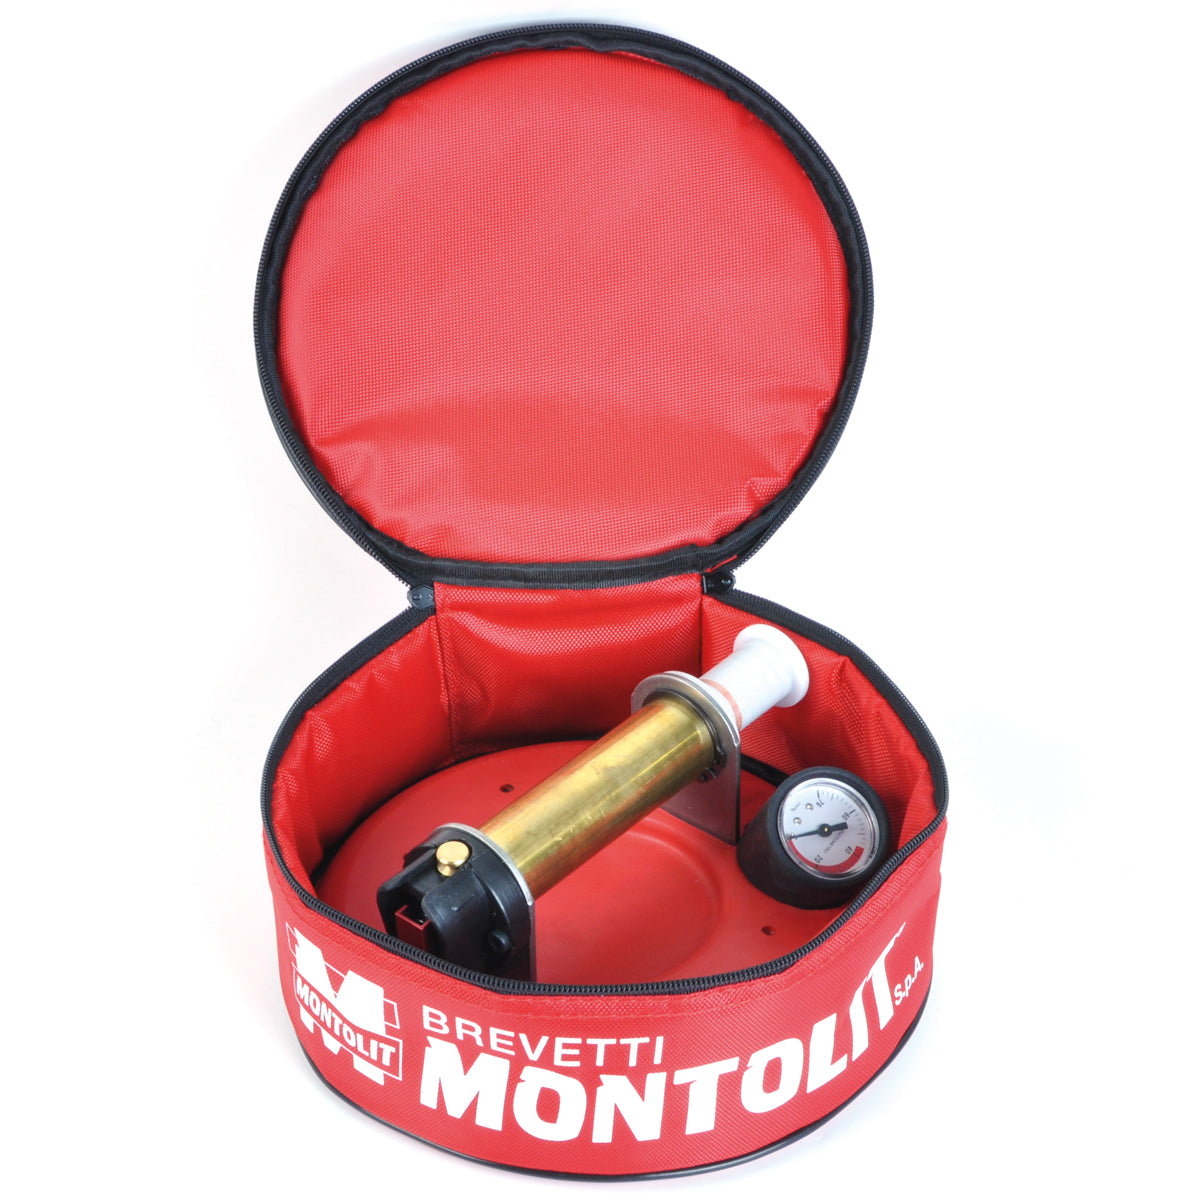 Montolit 8" Suction Cup with Gauge & Bag